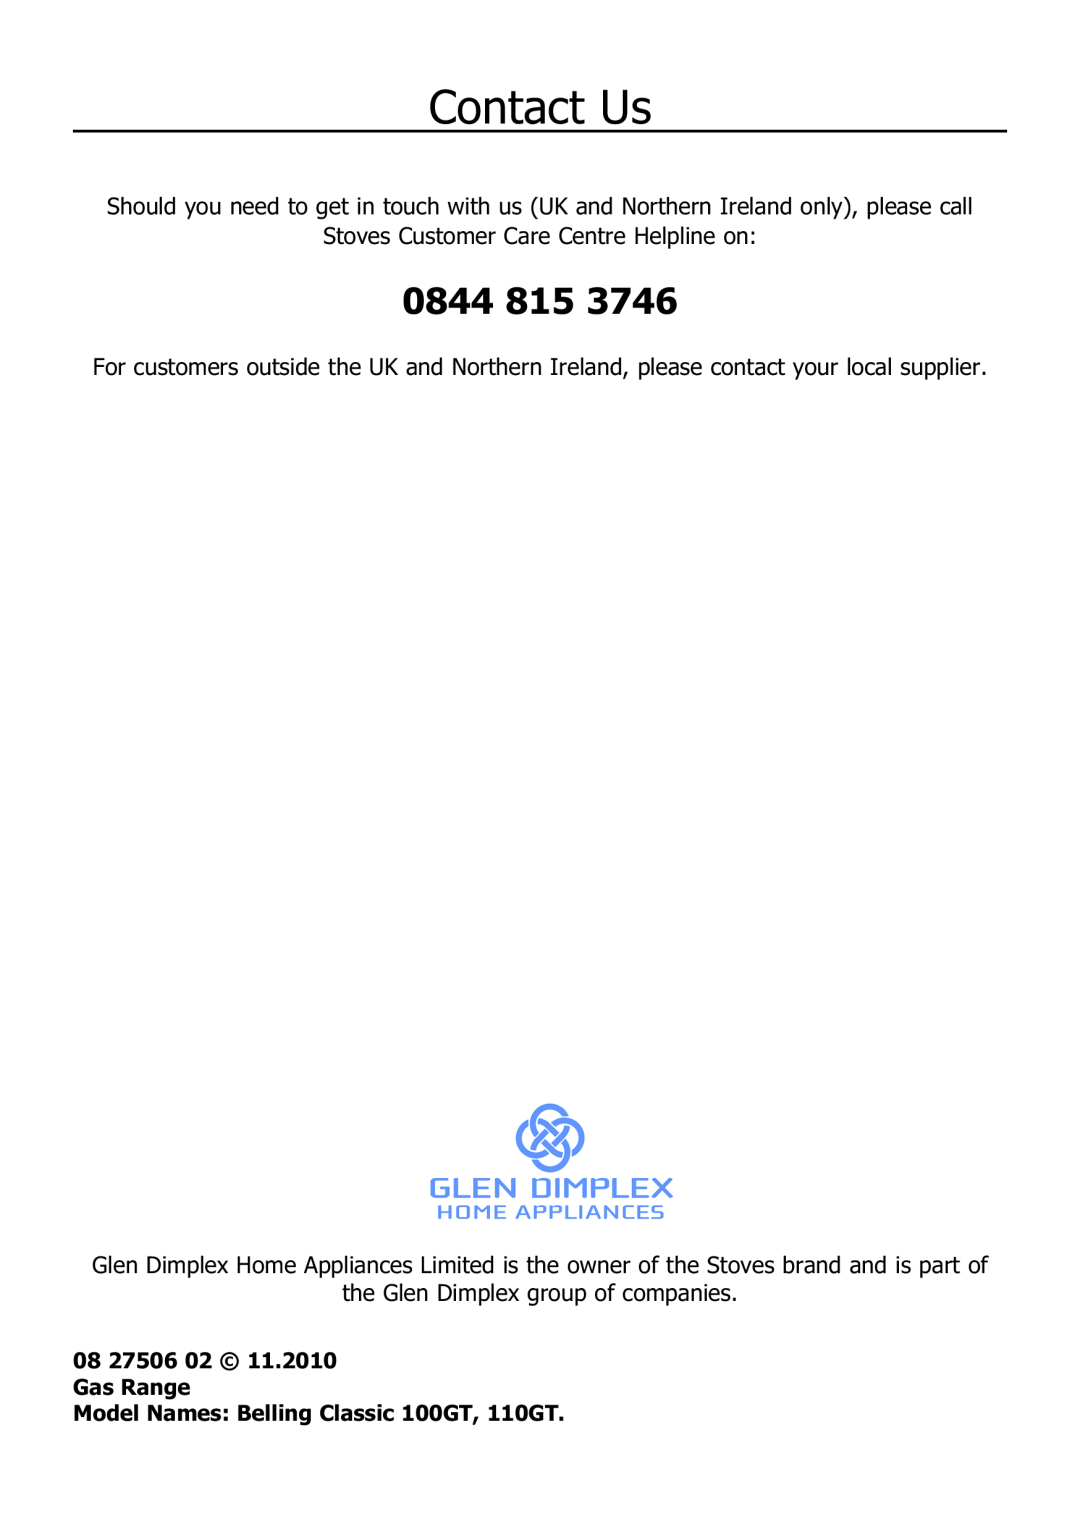 Glen Dimplex Home Appliances Ltd 110 GT, 100 manual Contact Us, 0844 